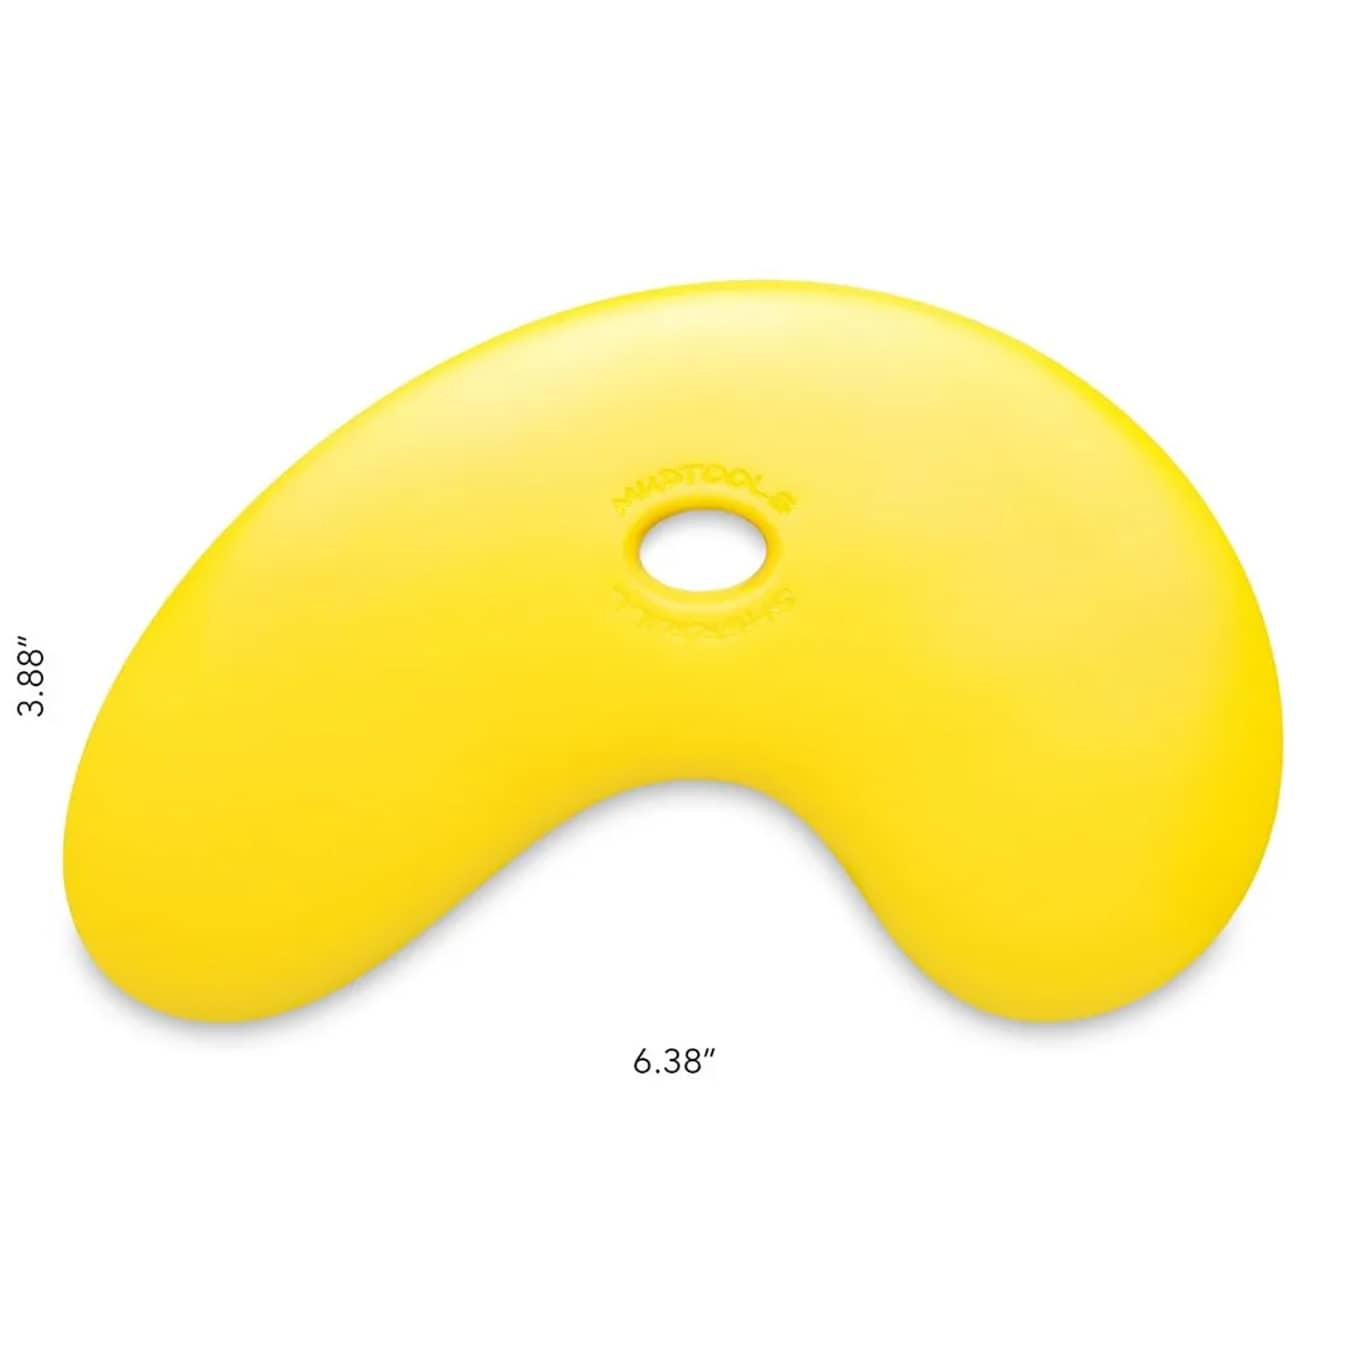 Mudtools Large Bowl Kidney – Yellow (Medium)